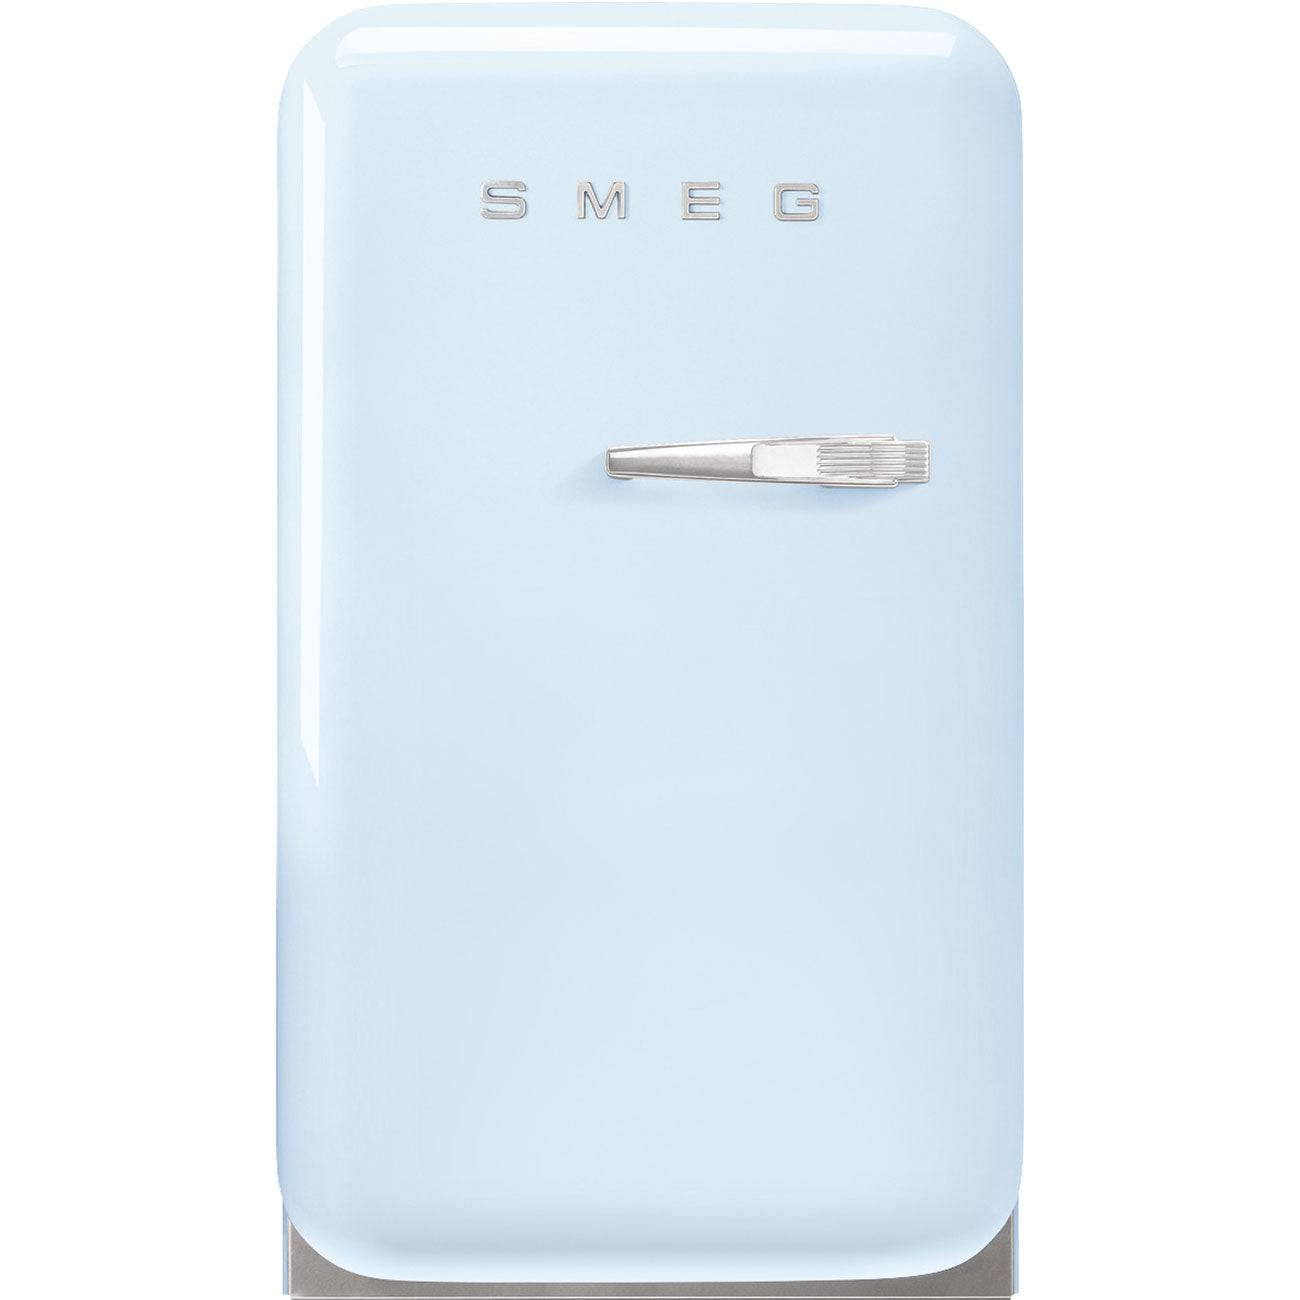 Fab5 Kühlschränke | Smeg Point - Online Handel